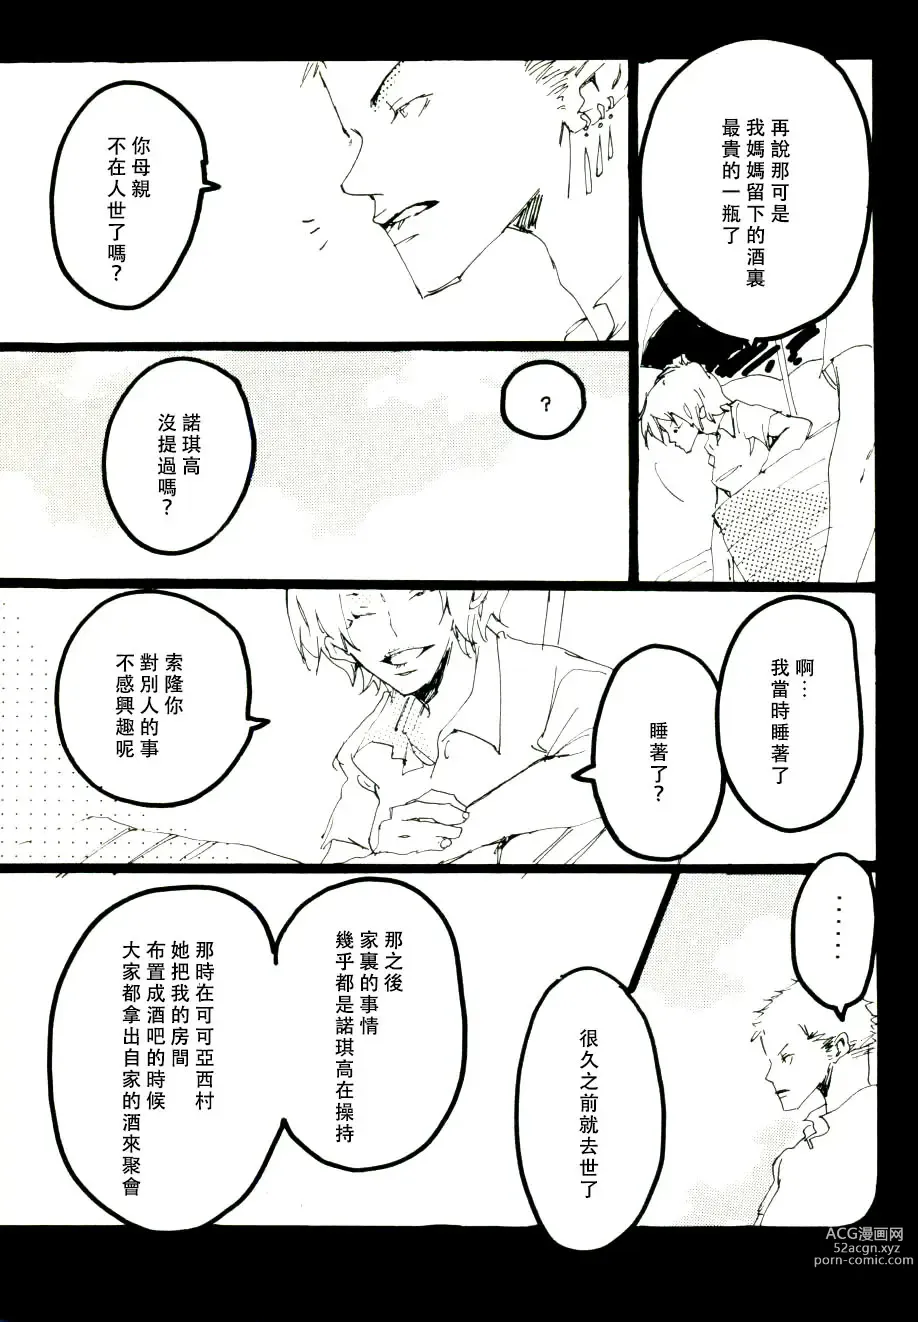 Page 9 of doujinshi 迦南宝地